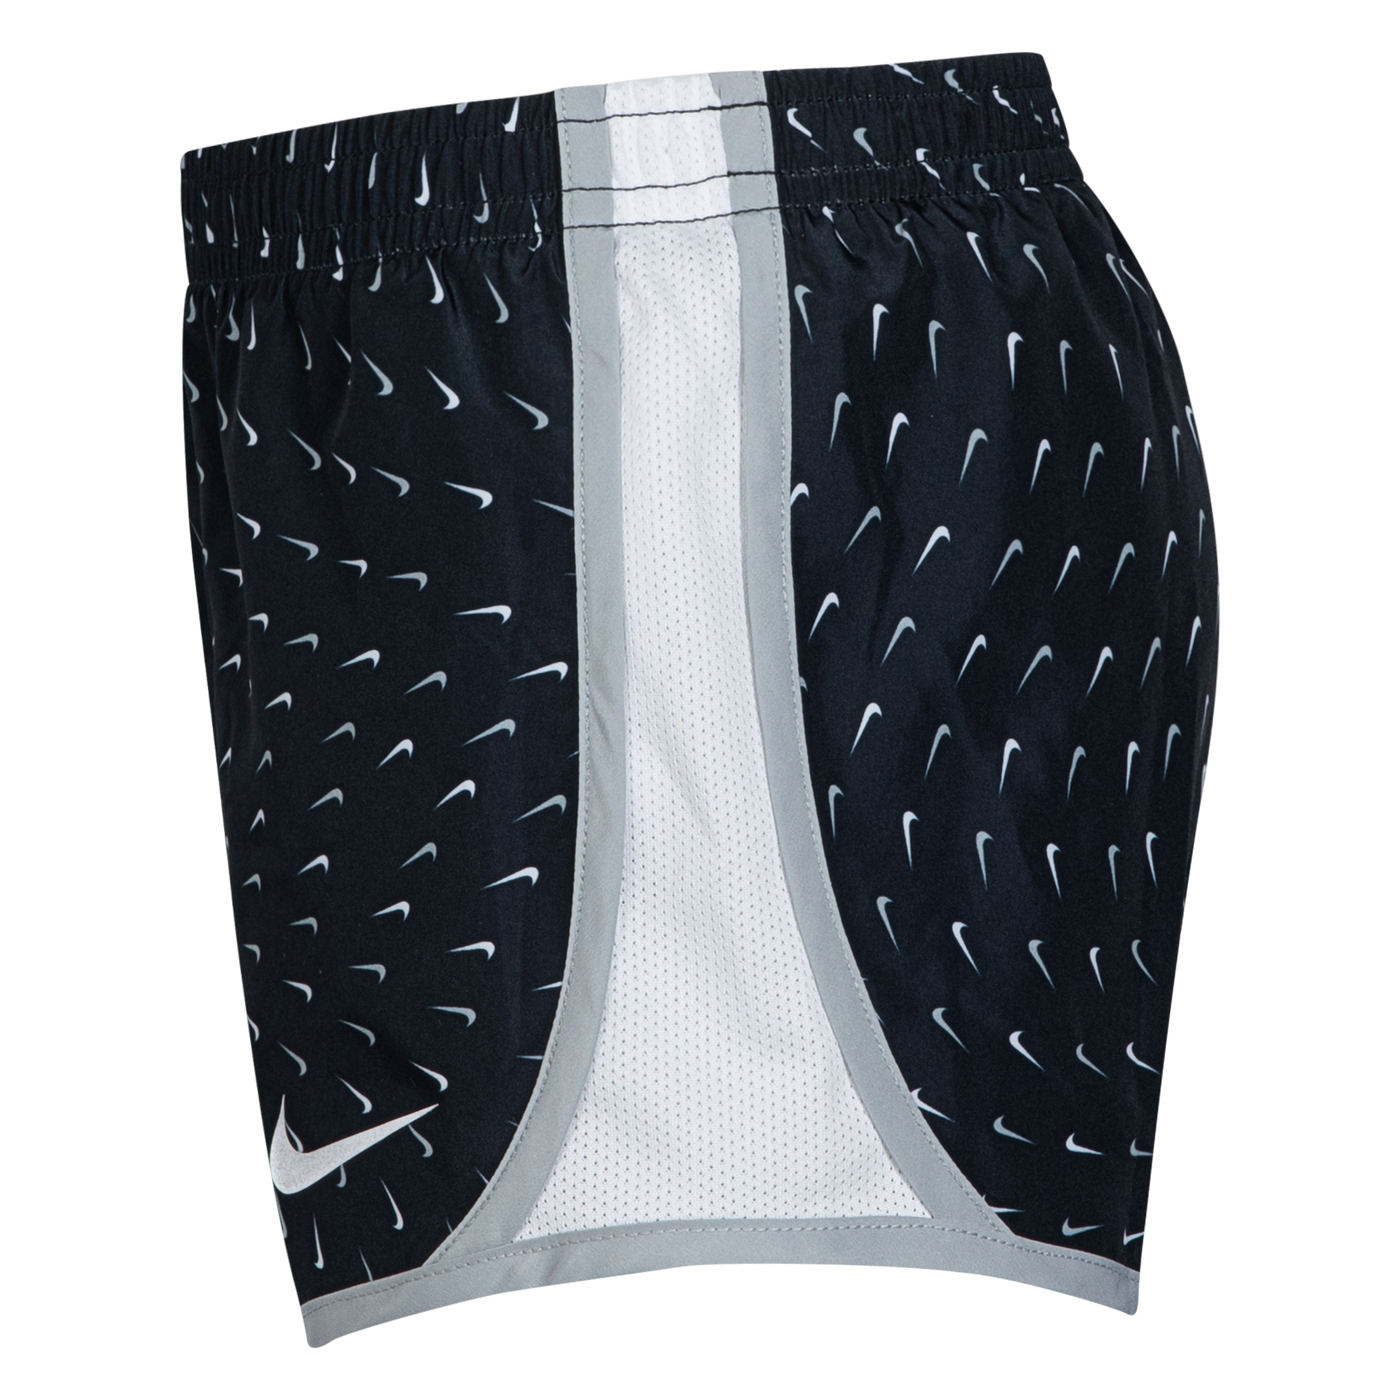 Nike Essential Sport Dri-FIT Tempo Shorts Shorts Nike   